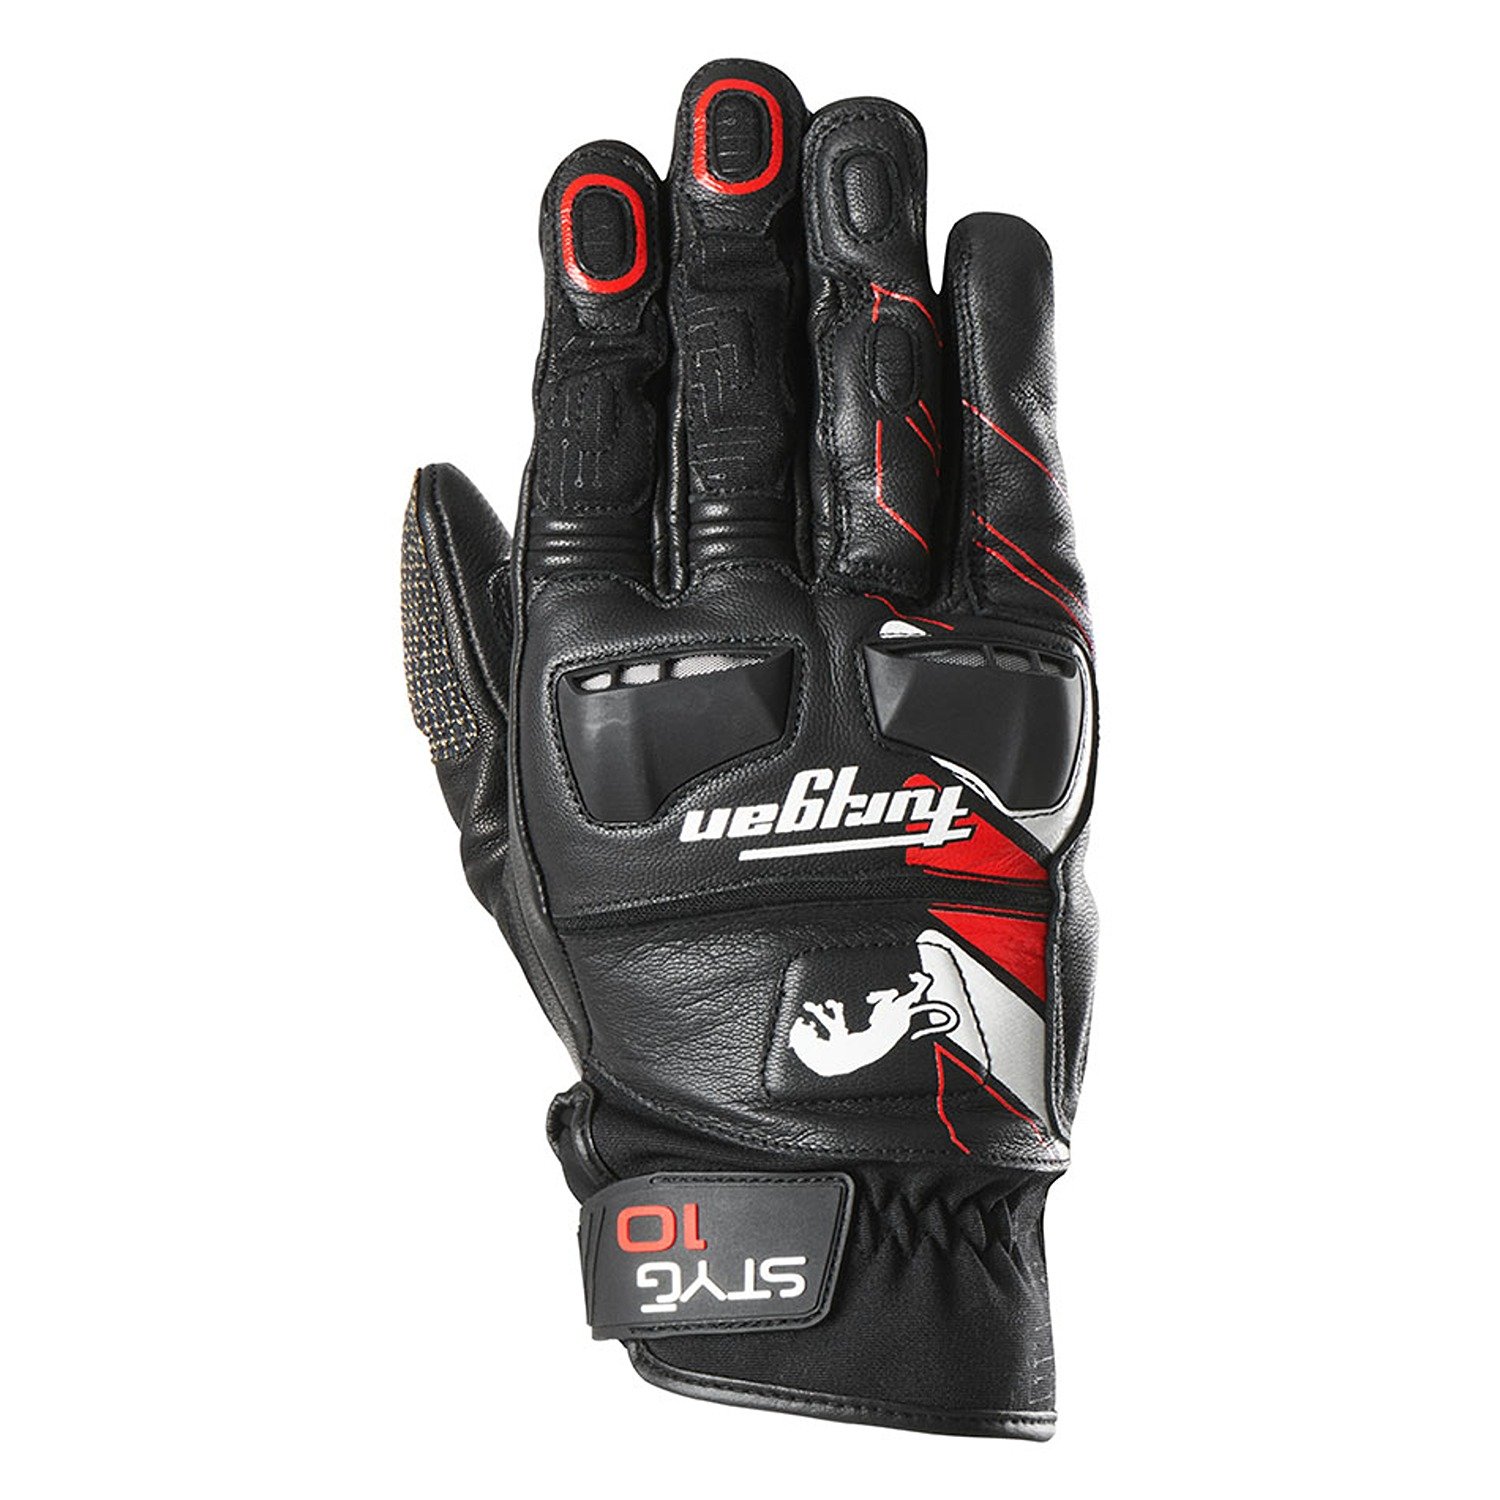 Image of Furygan Styg10 Gloves Black White Red Size 2XL ID 3435980385064